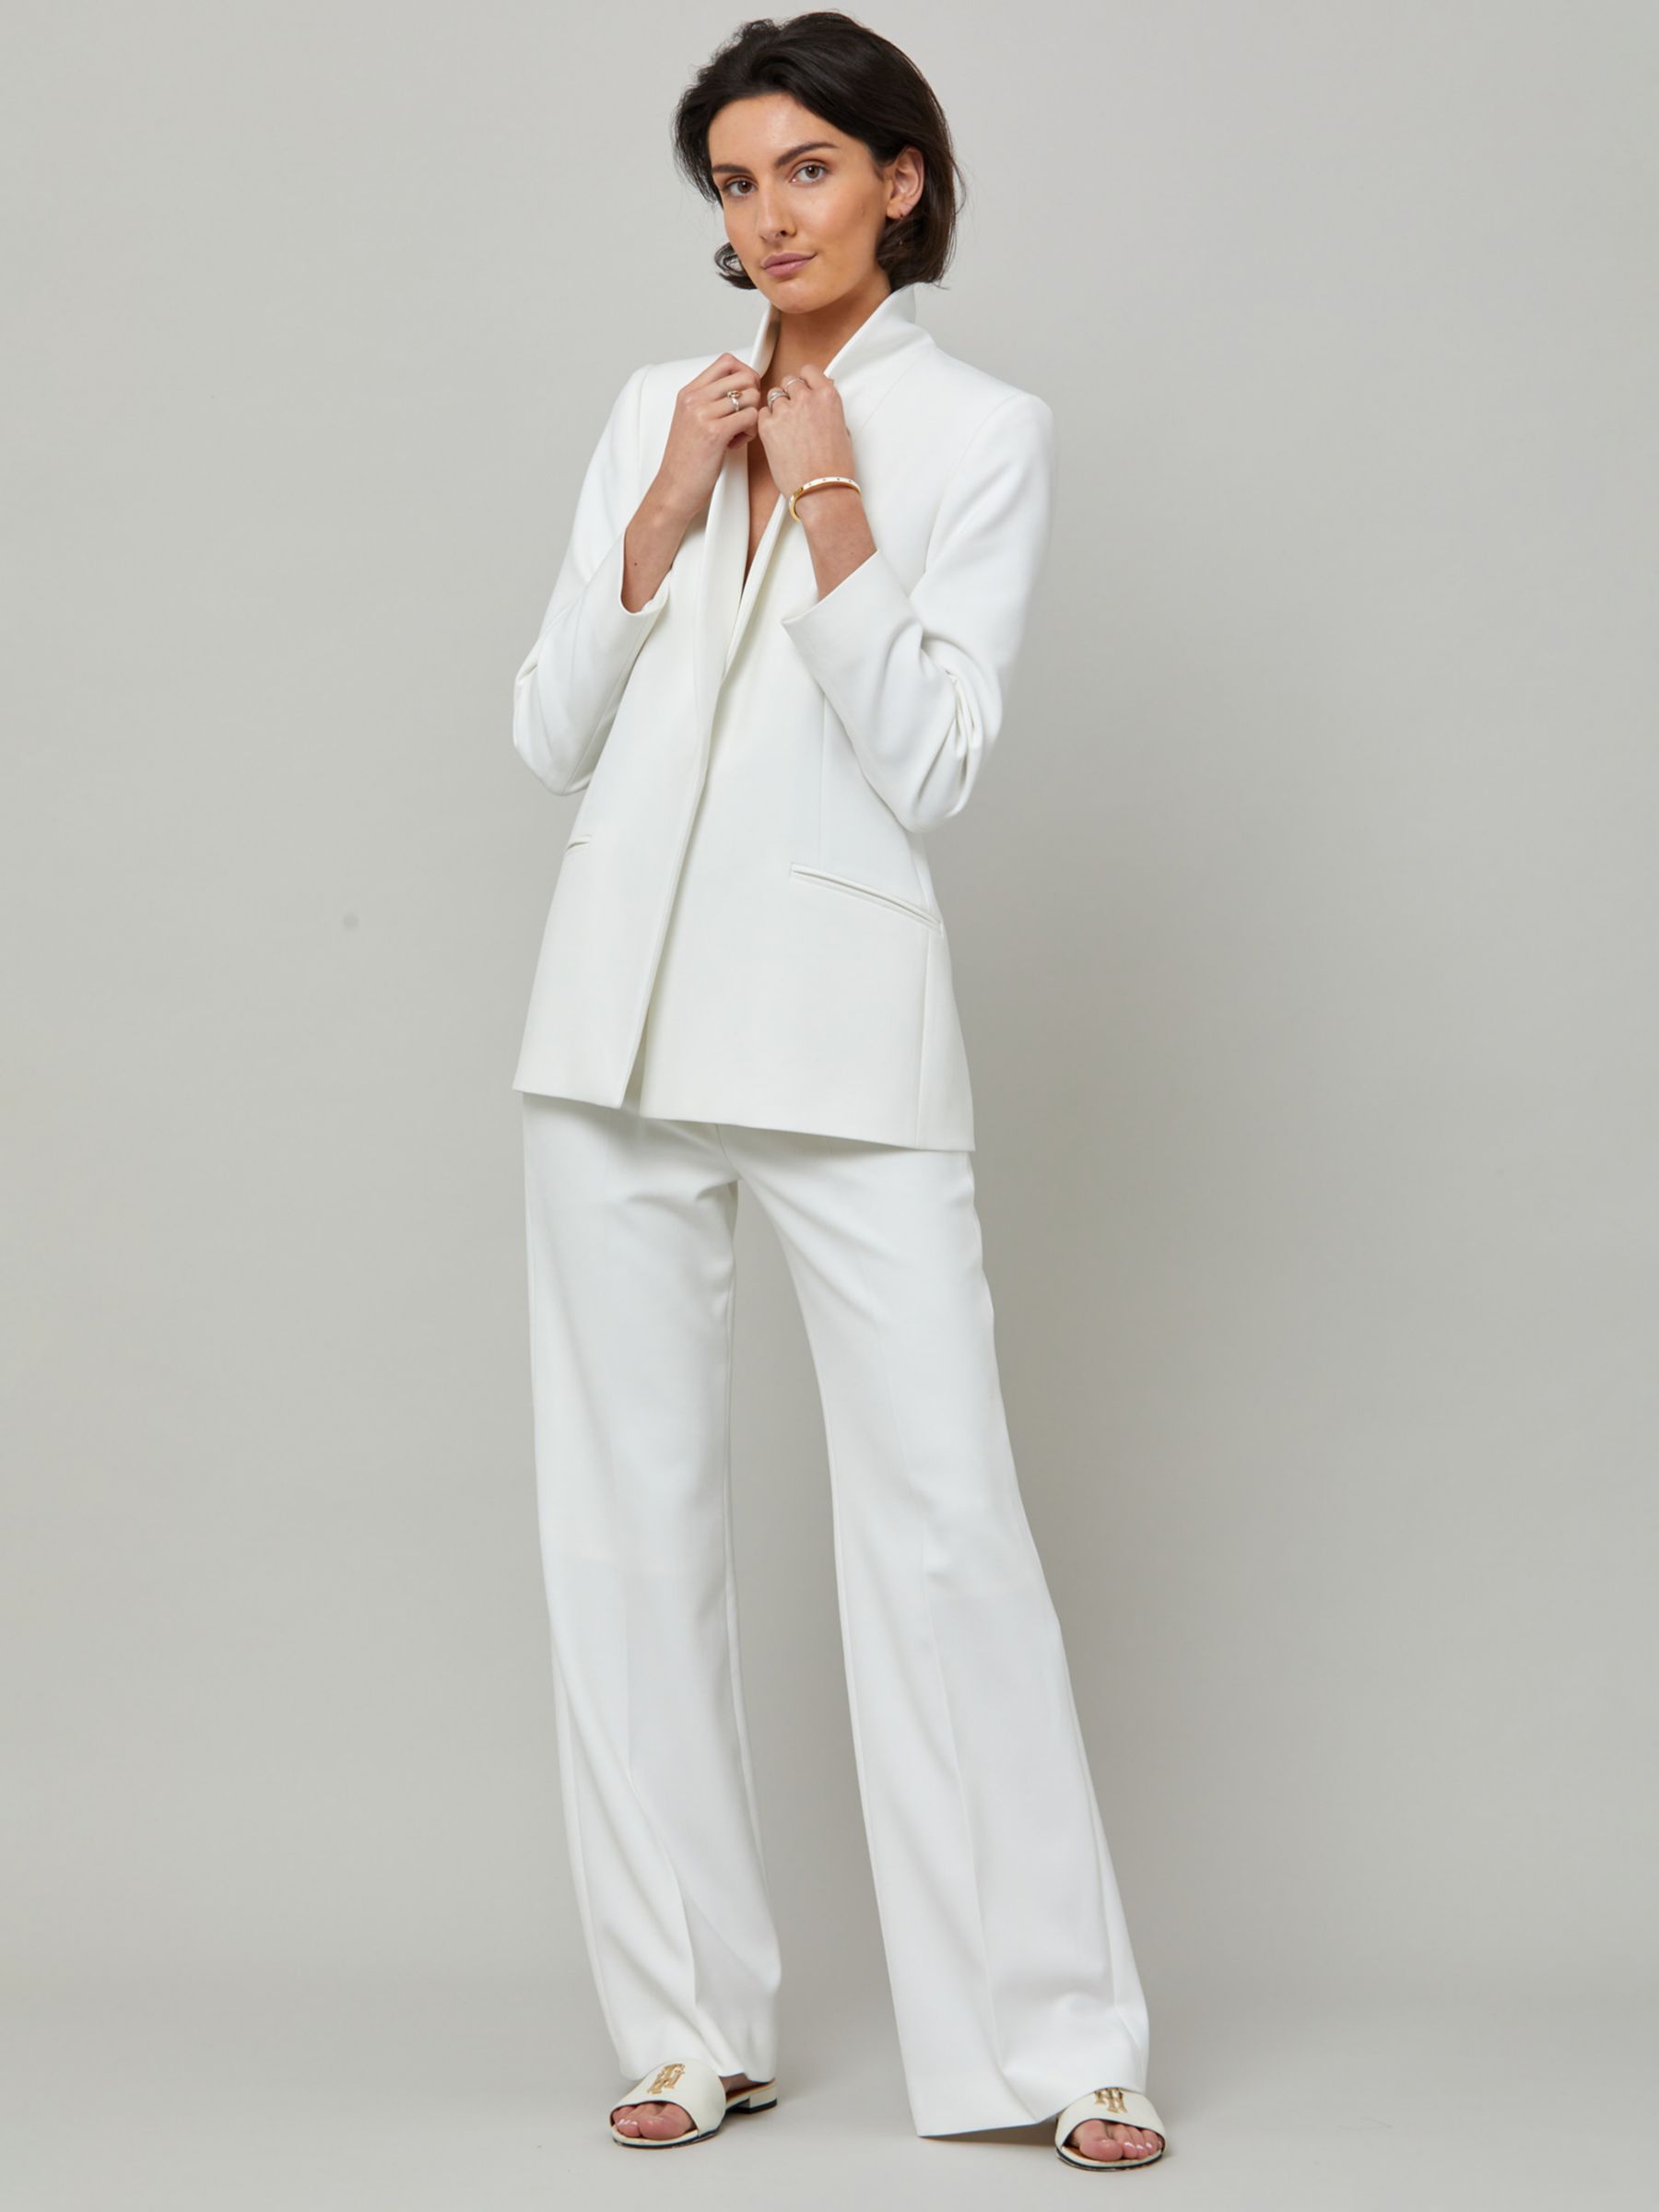 Helen McAlinden Kelly Trousers, White at John Lewis & Partners